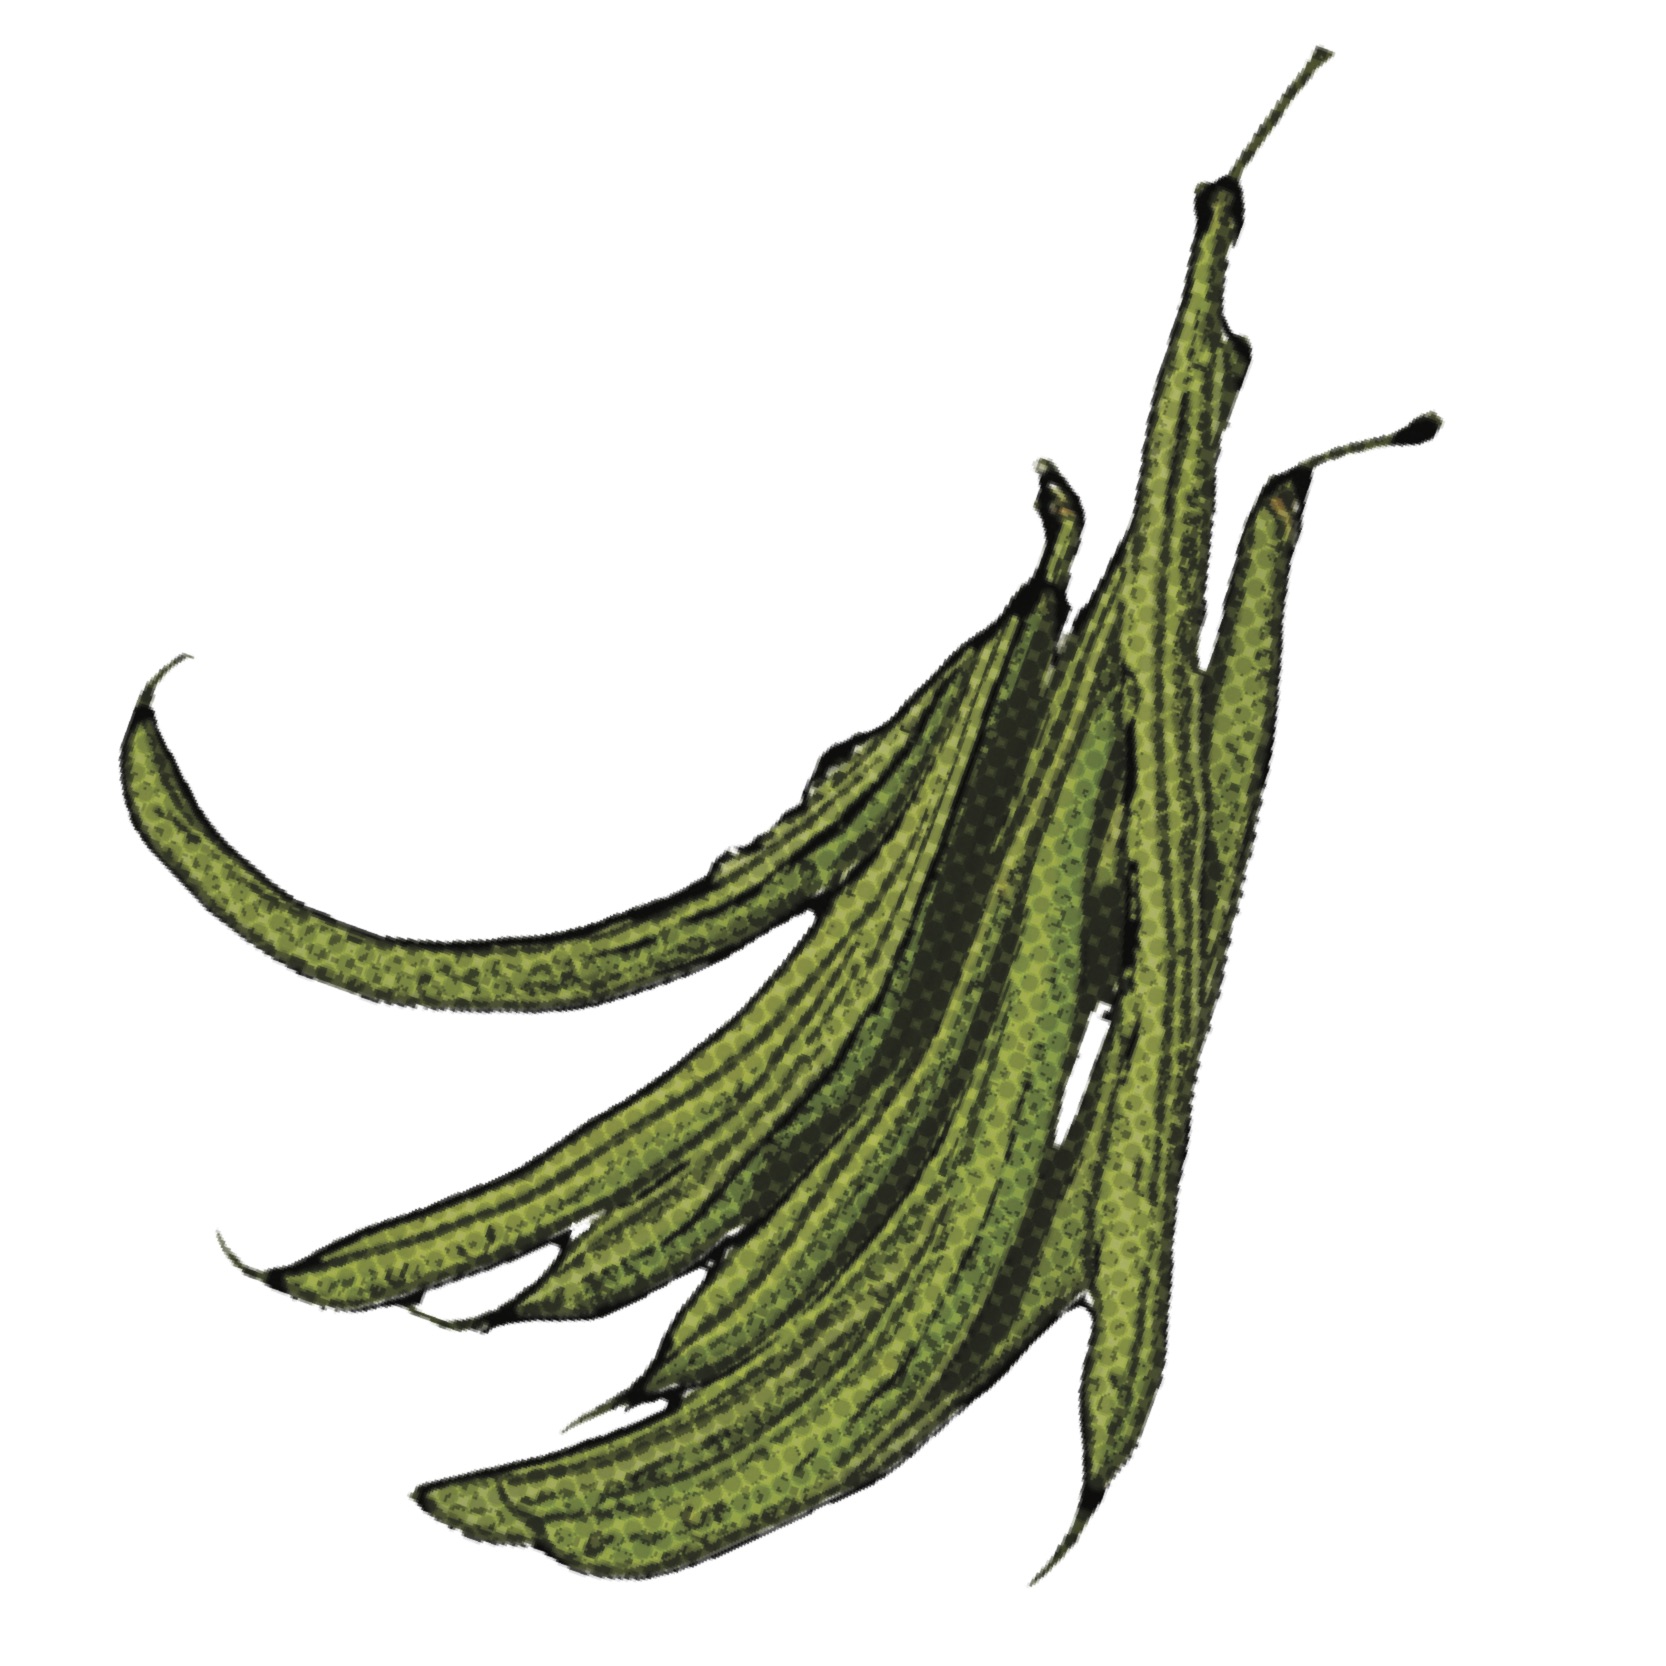 Find Green Bean Recipes